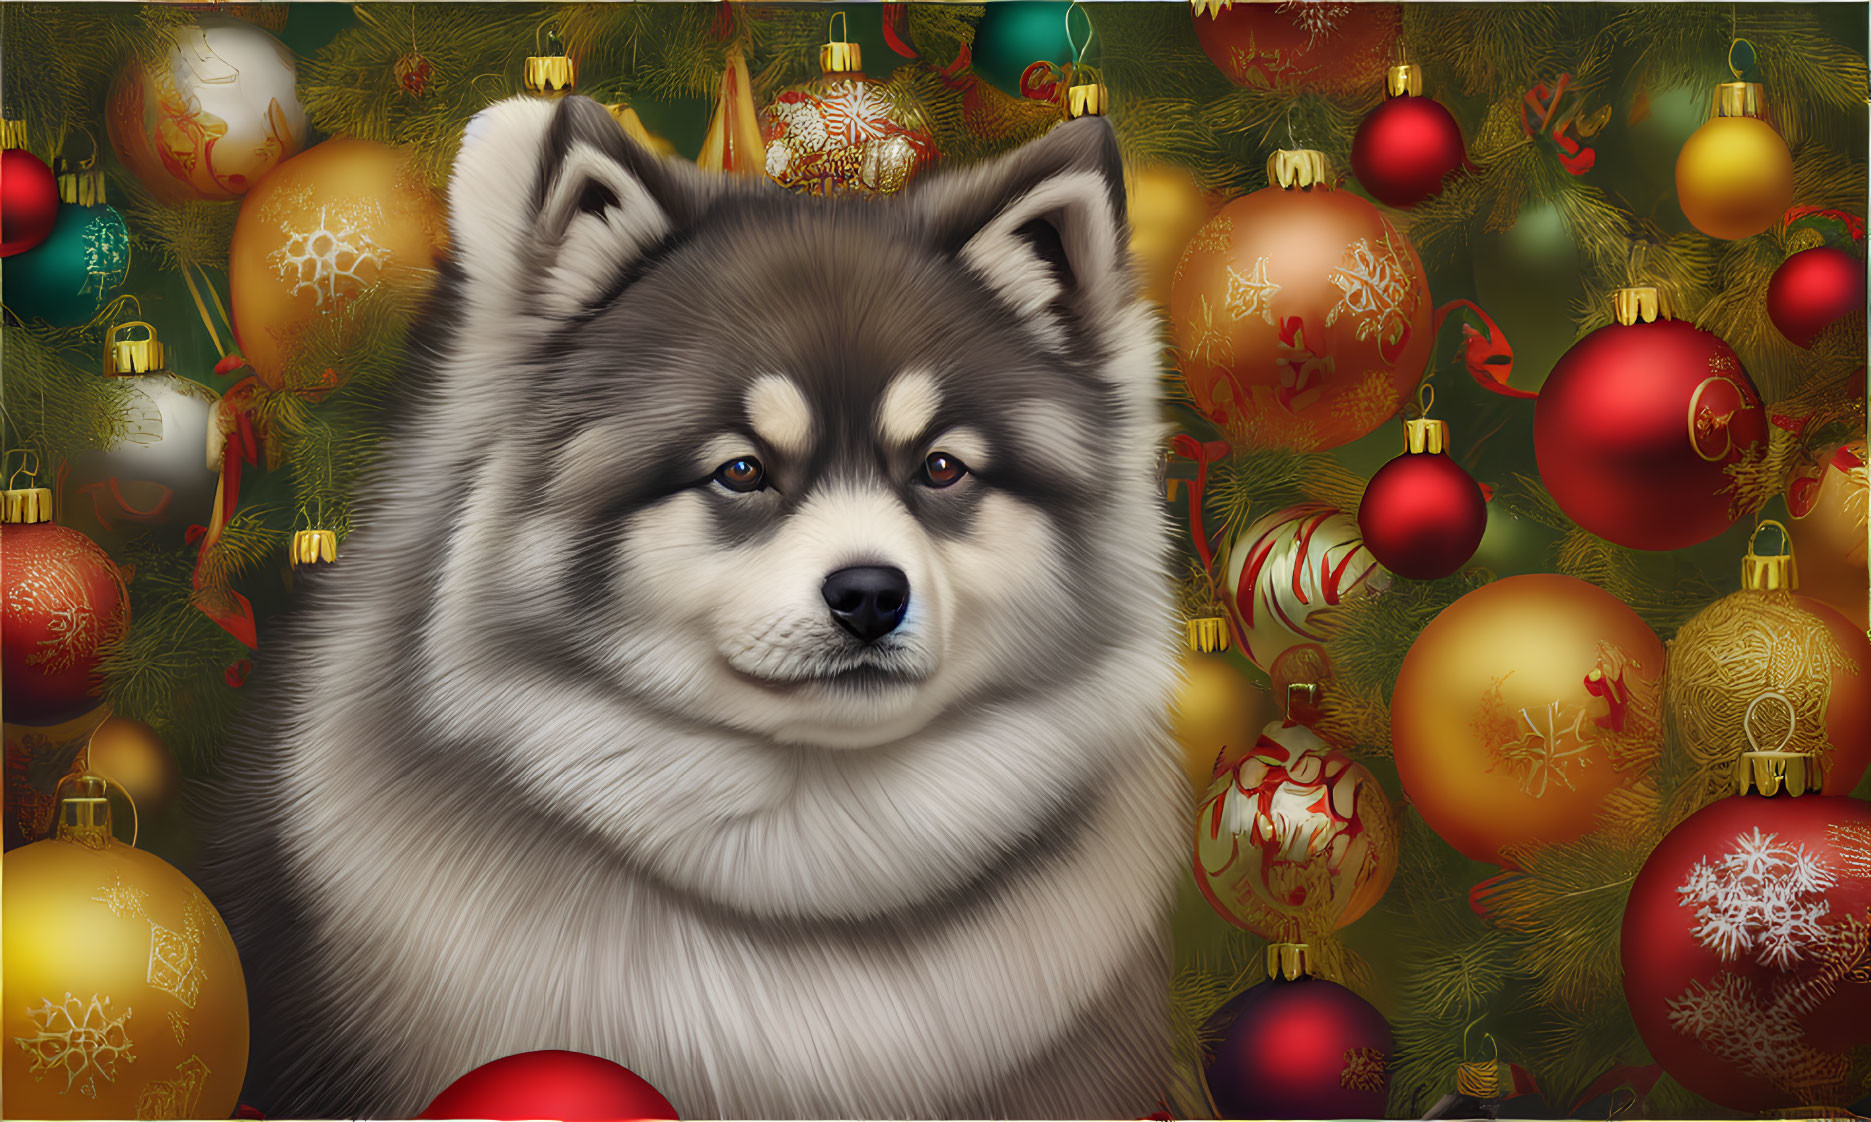 Fluffy Alaskan Malamute Dog with Christmas Decorations